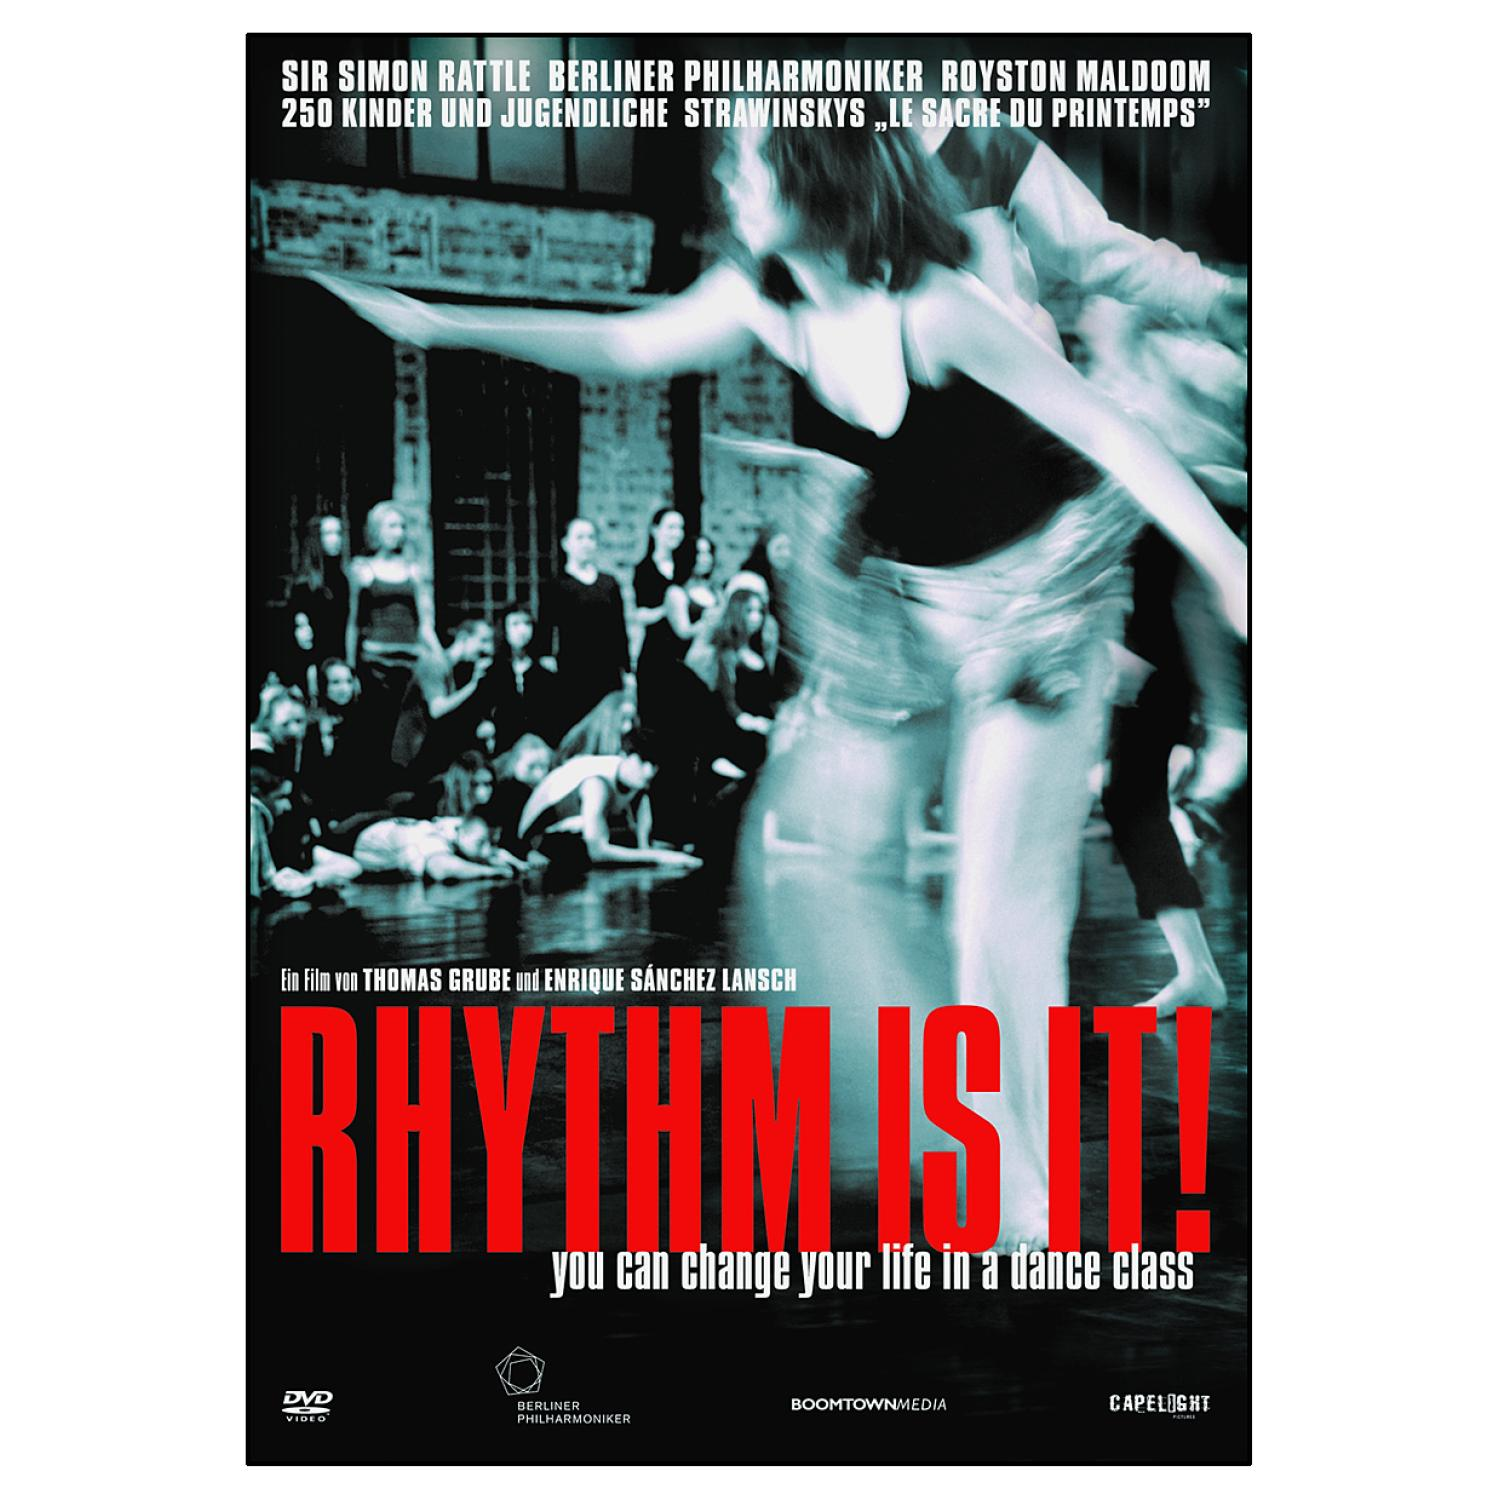 Sir Simon Rhythm it! - Rattle; Berliner (DVD) is - Philharmoniker